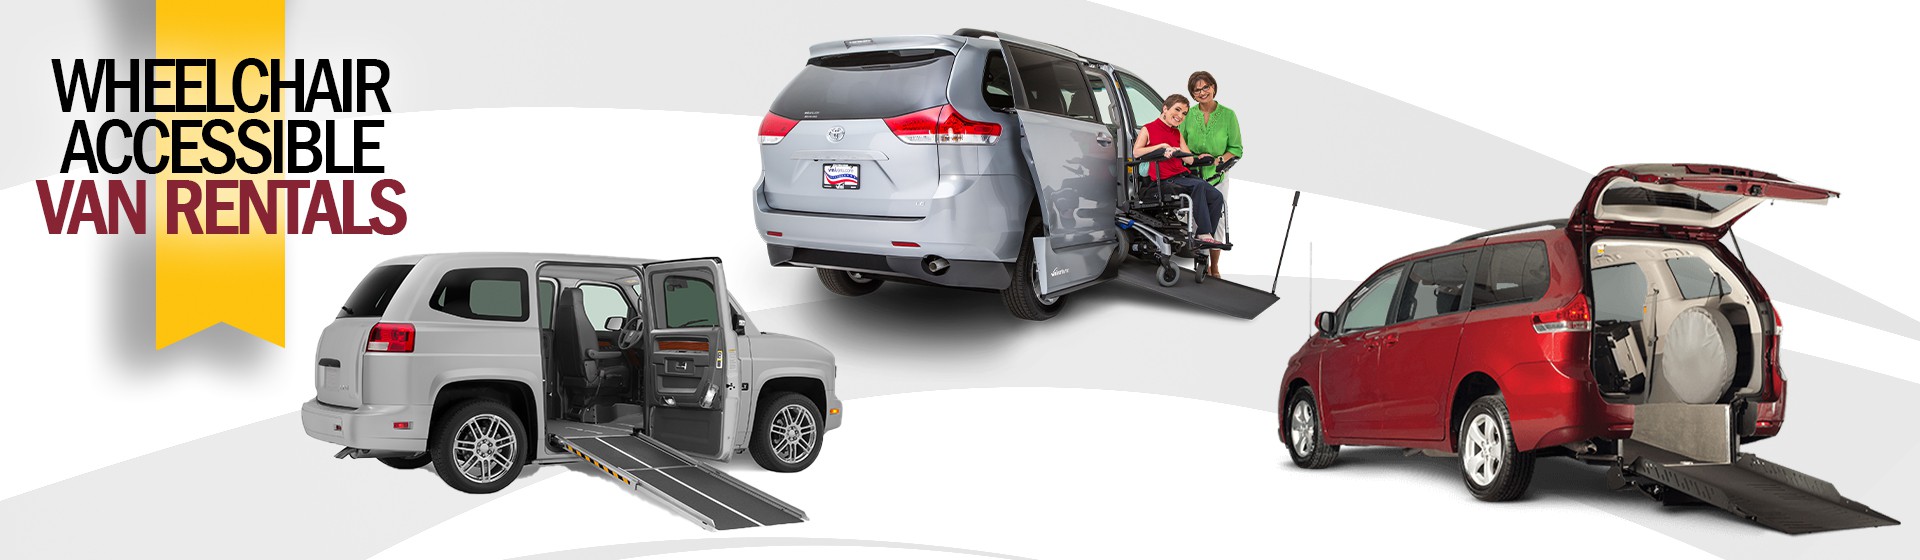 wheelchair accessible van rental